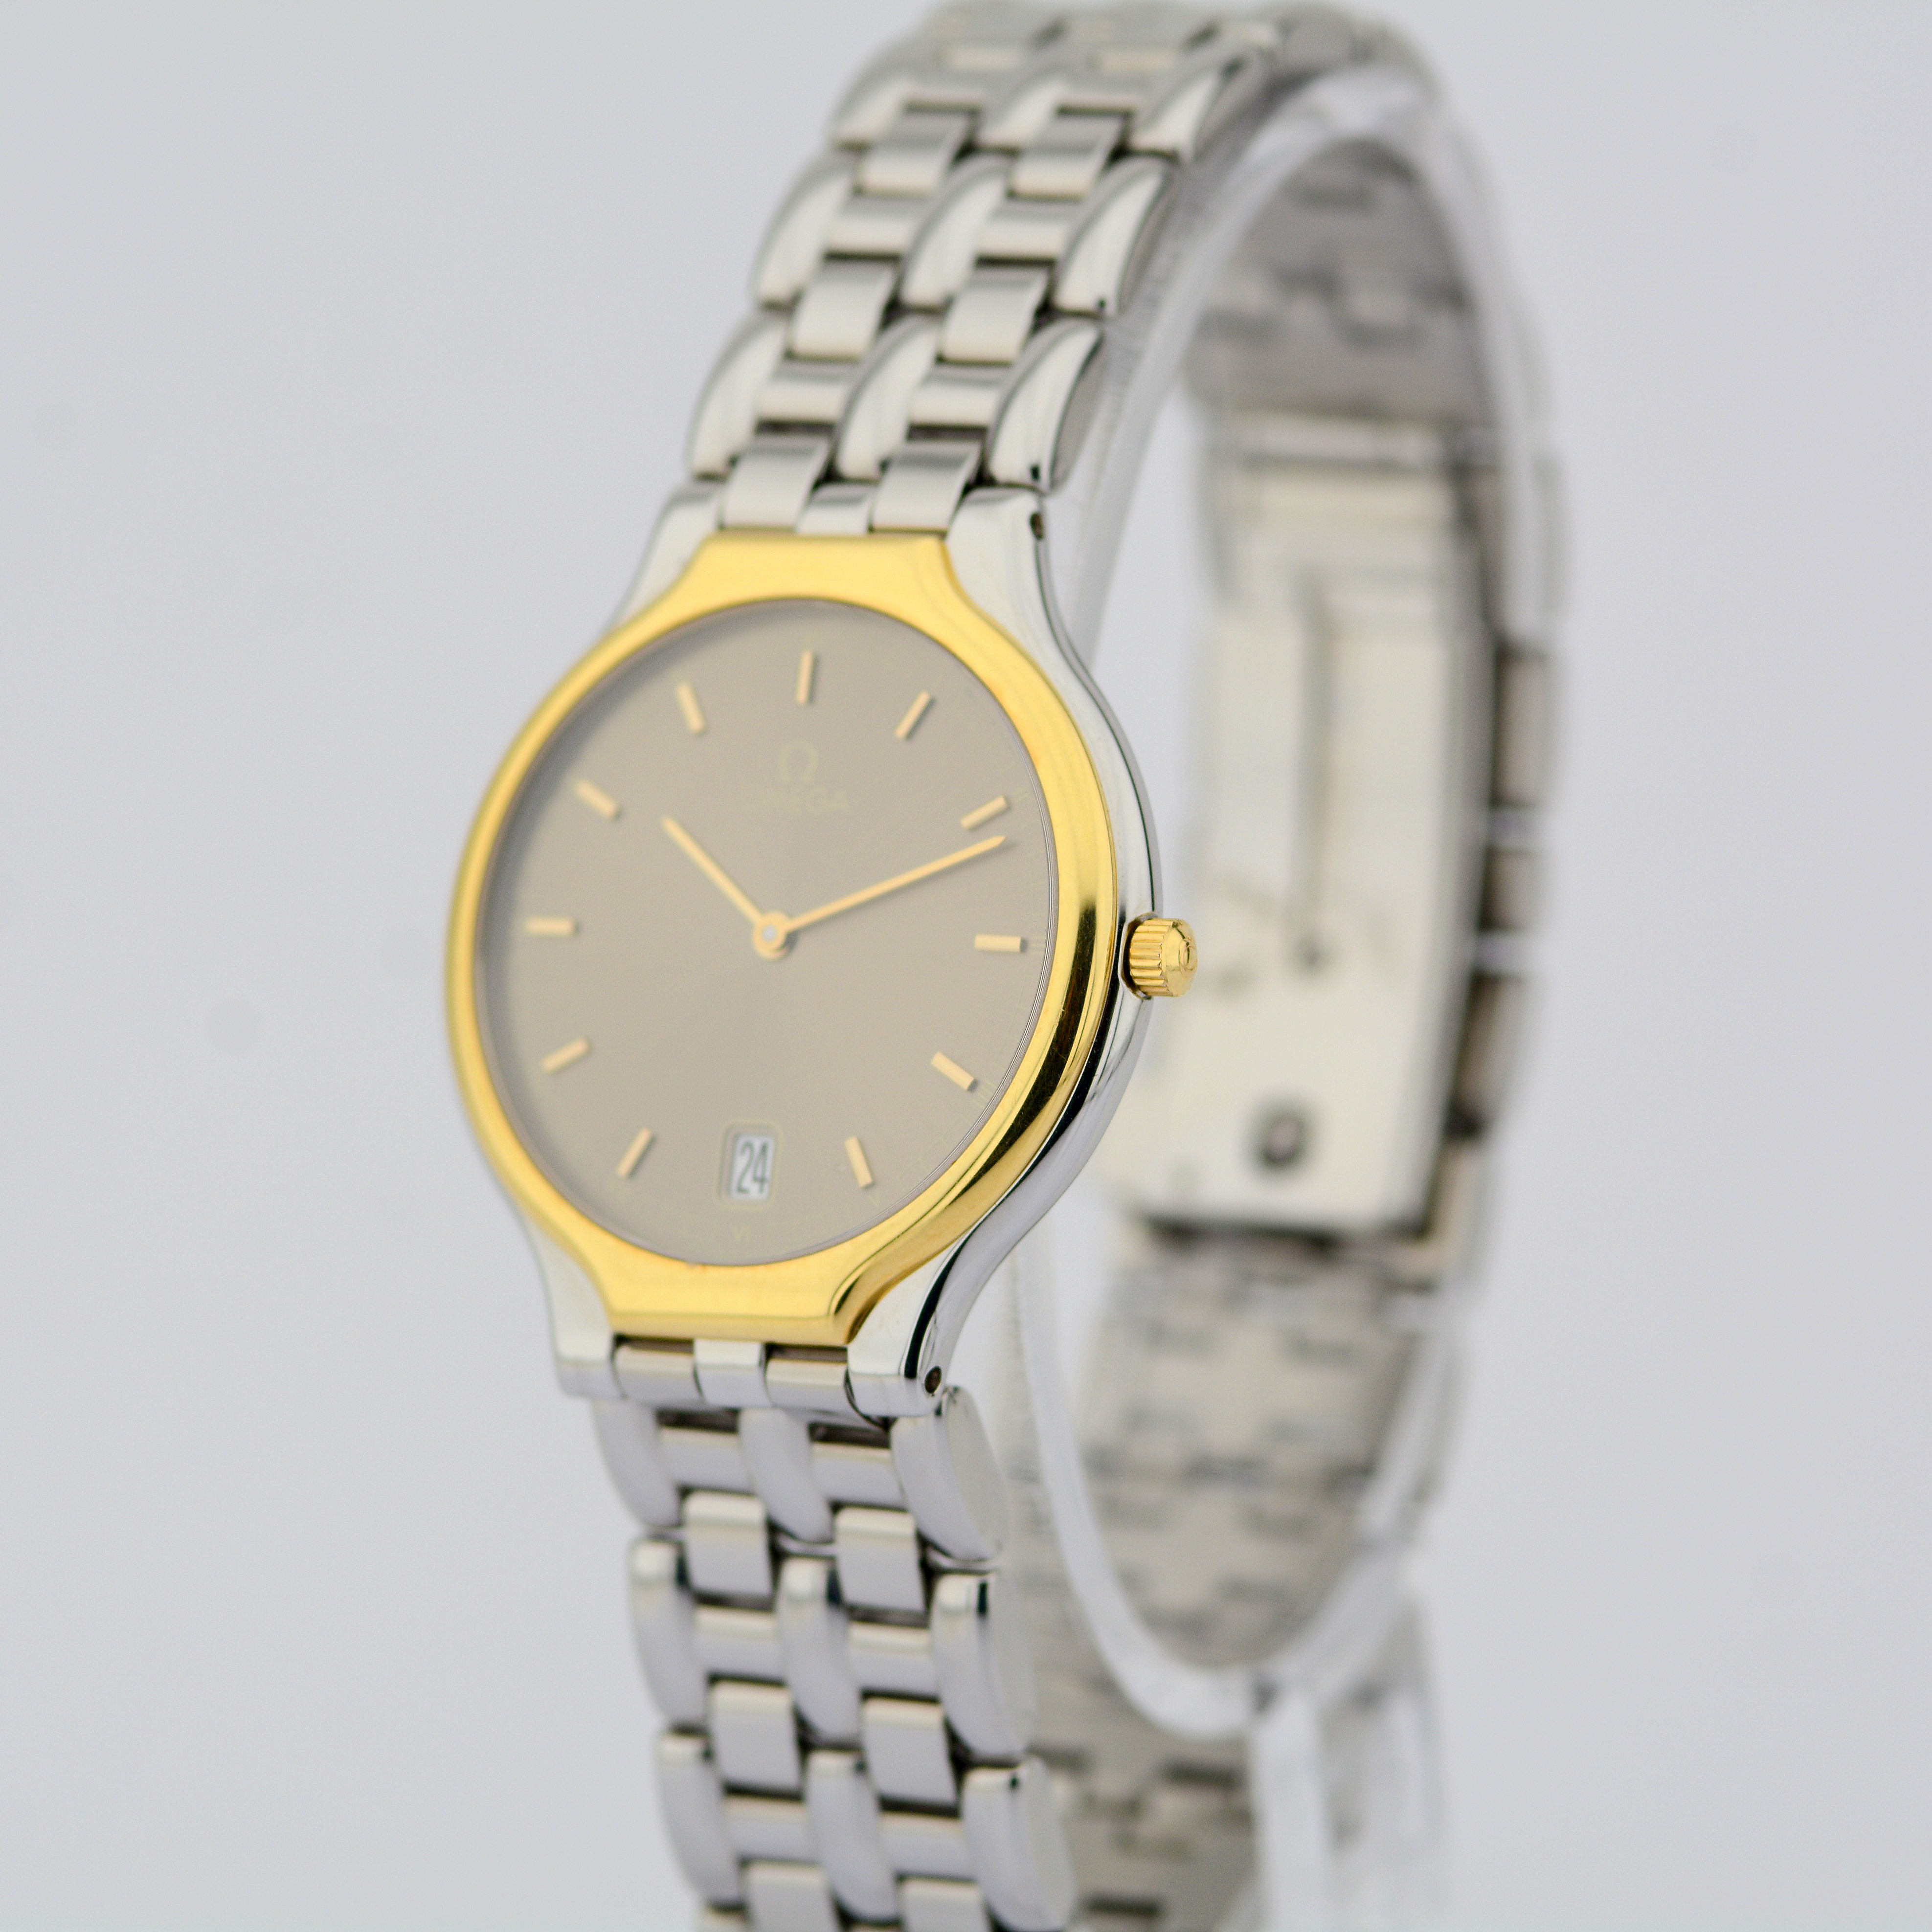 Omega / De Ville Symbol 18K Yellow gold Date - UNWORN - Gentlmen's Gold/Steel Wrist Watch - Image 3 of 6